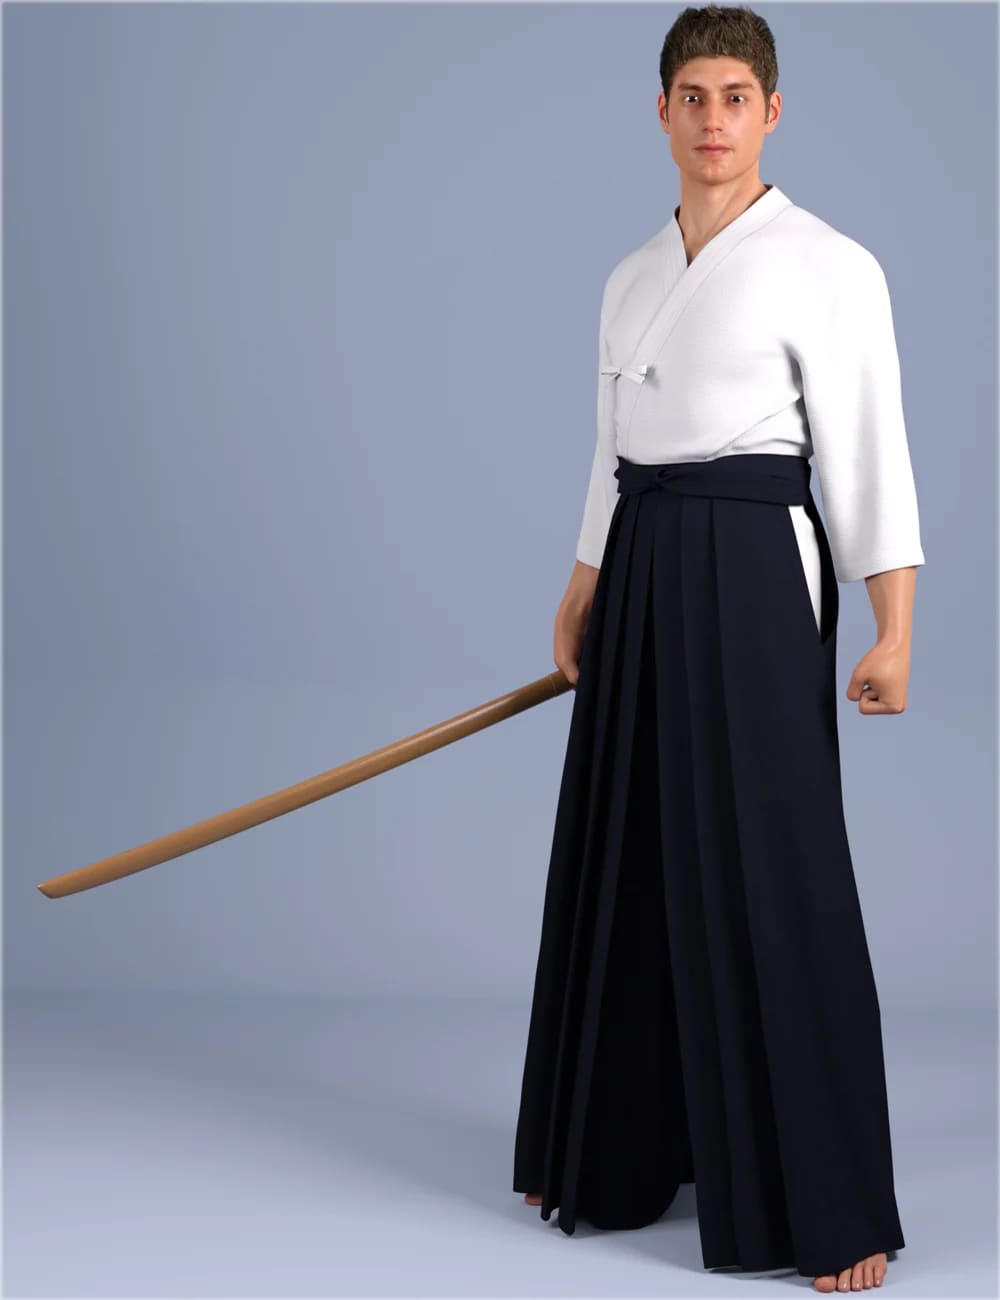 dForce HnC Kendo Uniform Outfits for Genesis 8.1 Males_DAZ3D下载站